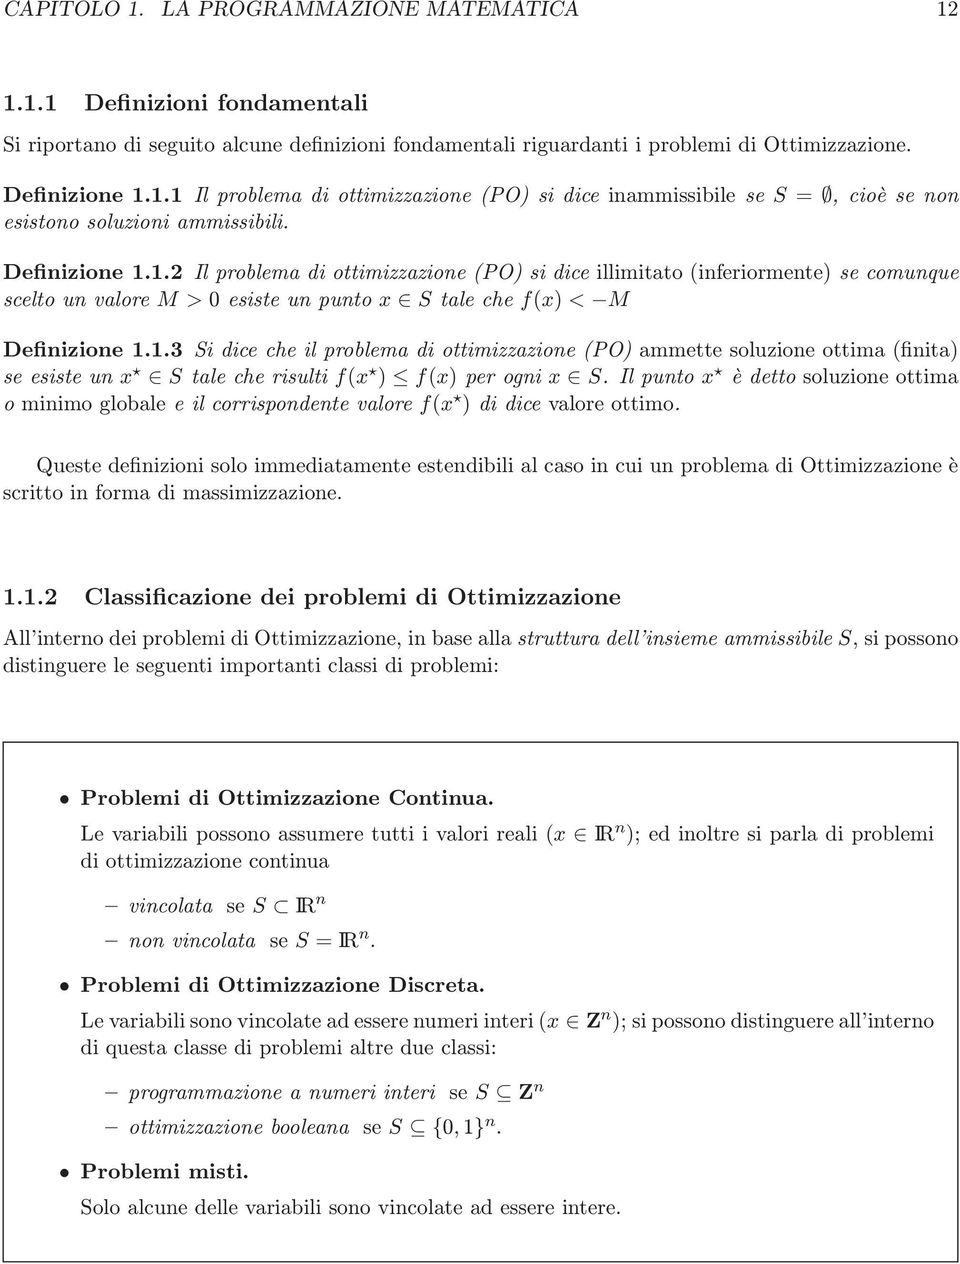 Ilpuntox èdettosoluzioneottima ominimoglobaleeilcorrispondentevaloref(x )didicevaloreottimo.